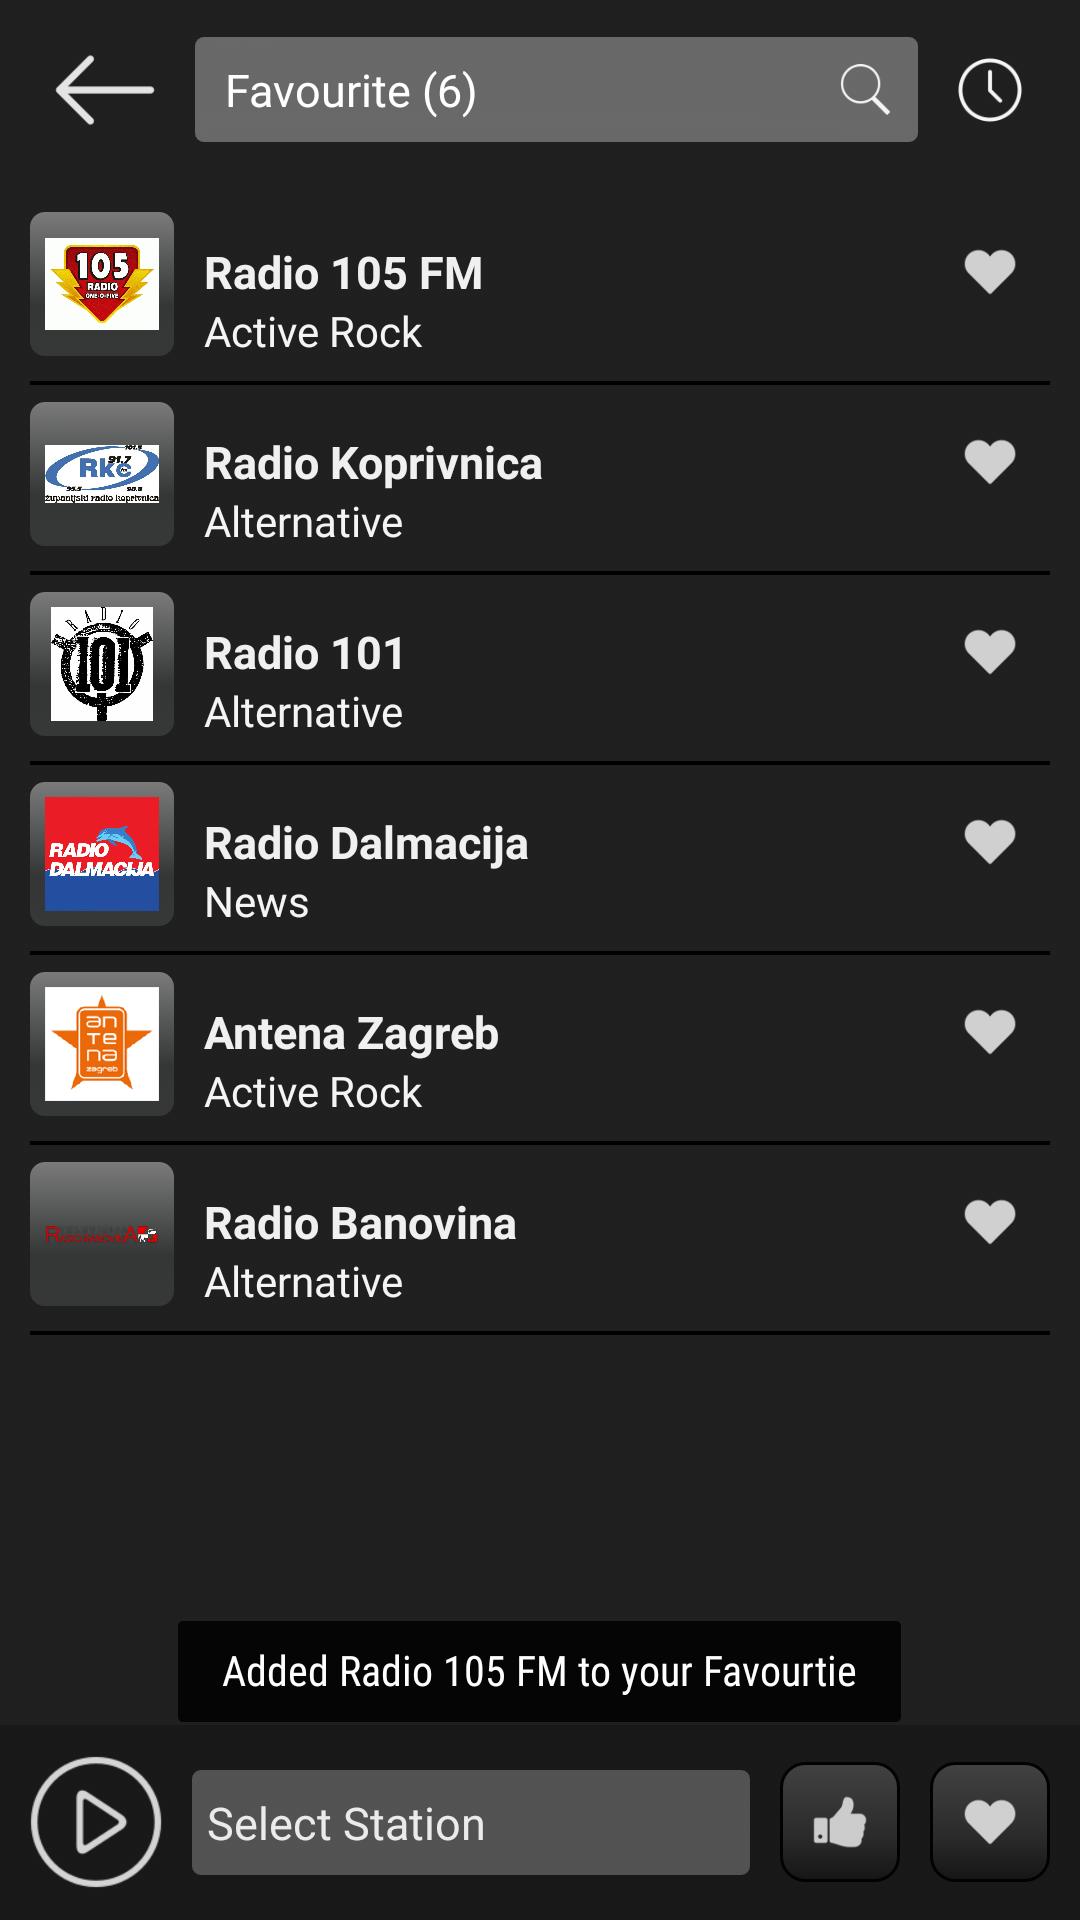 Croatia Radio Online - Croatia FM AM Music 2019 for Android - APK Download